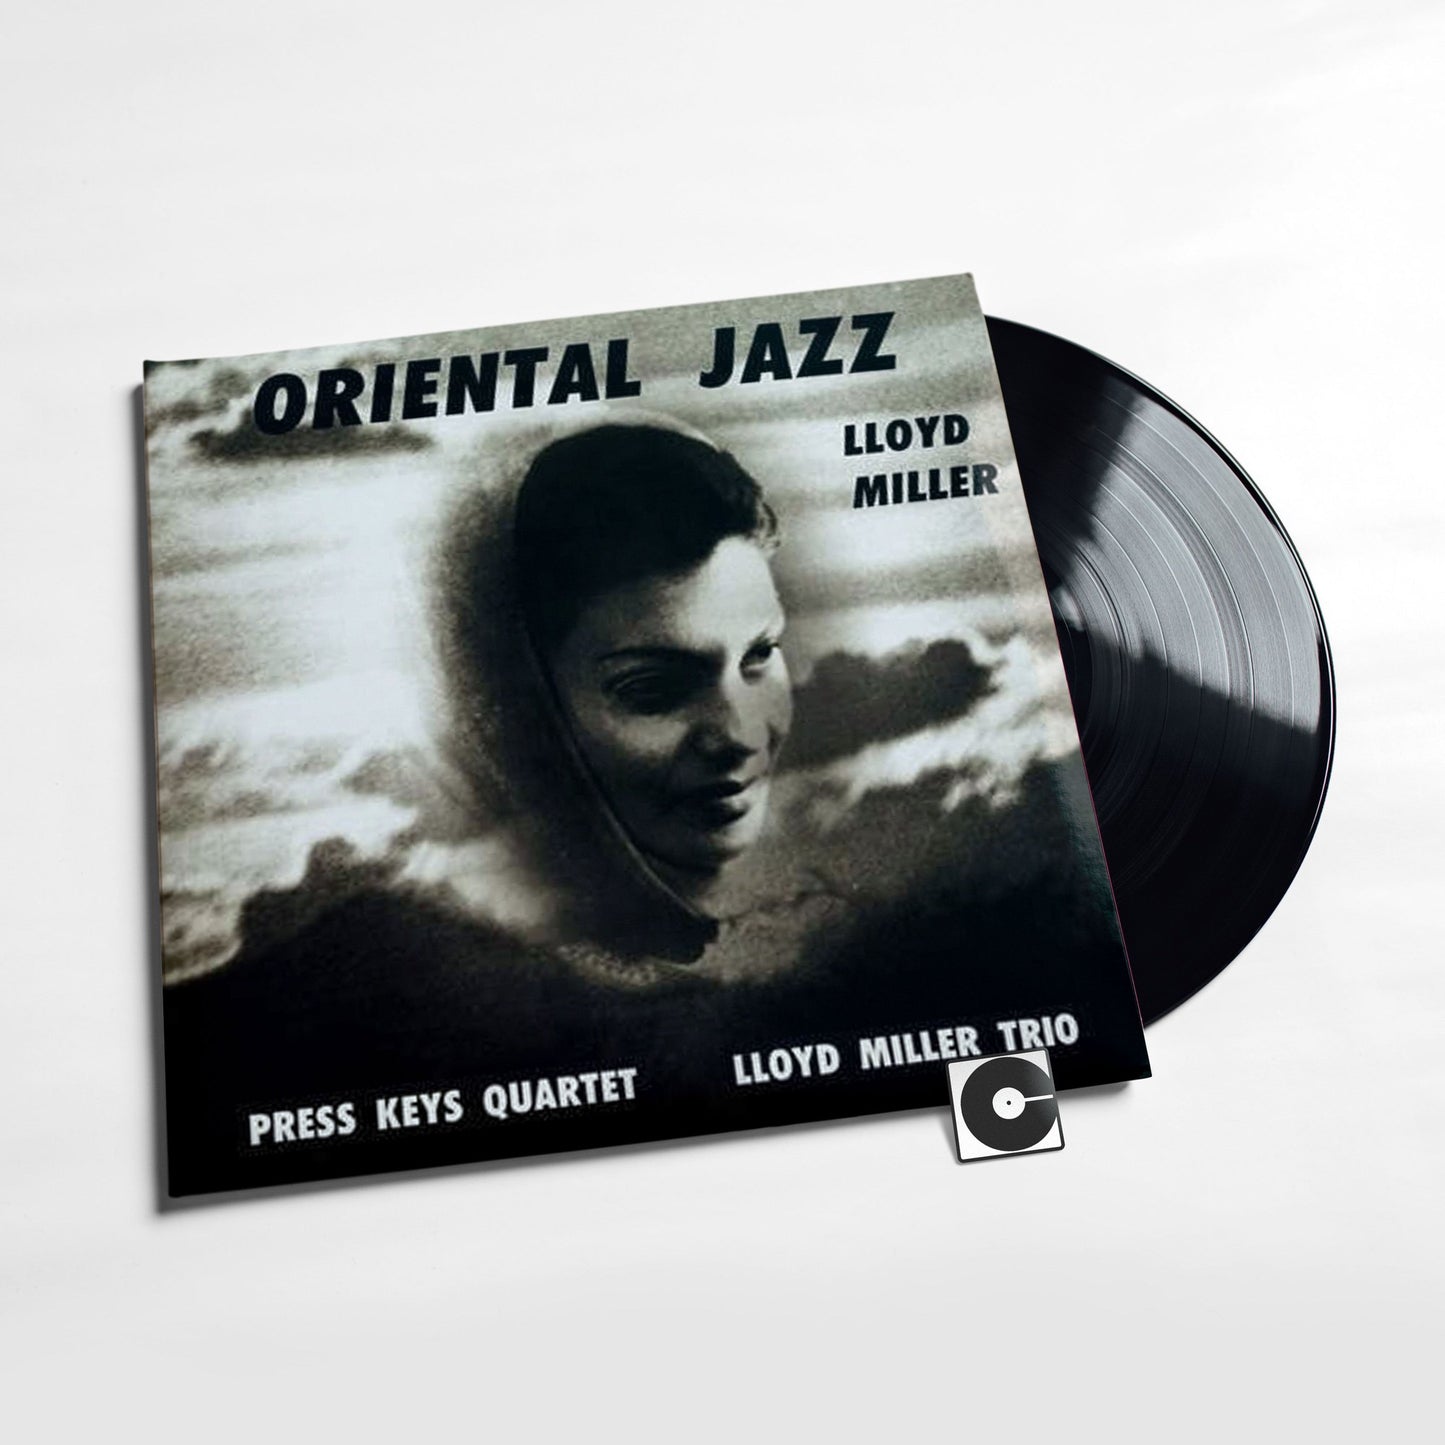 Lloyd Miller - "Oriental Jazz"